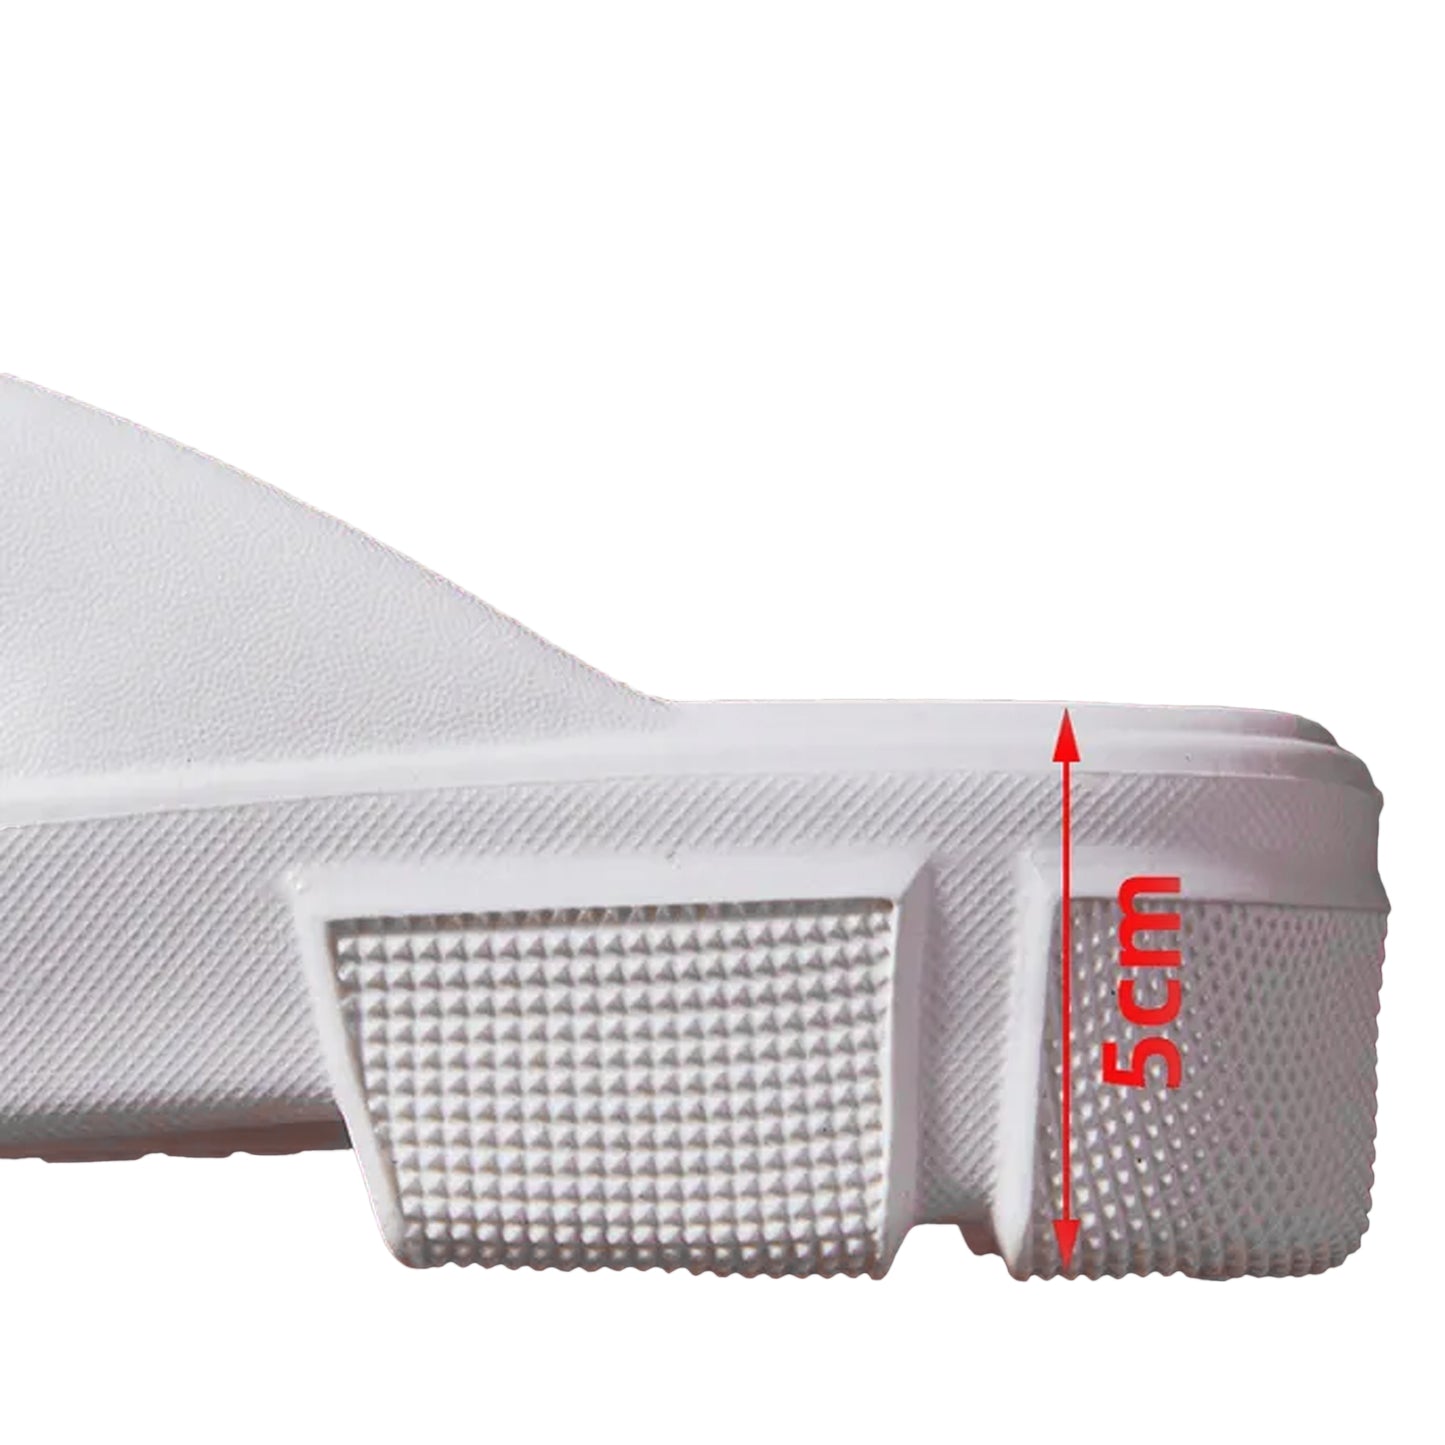 Thong Slide Chucky Sole Platform Sandals Light-Weight EVA White